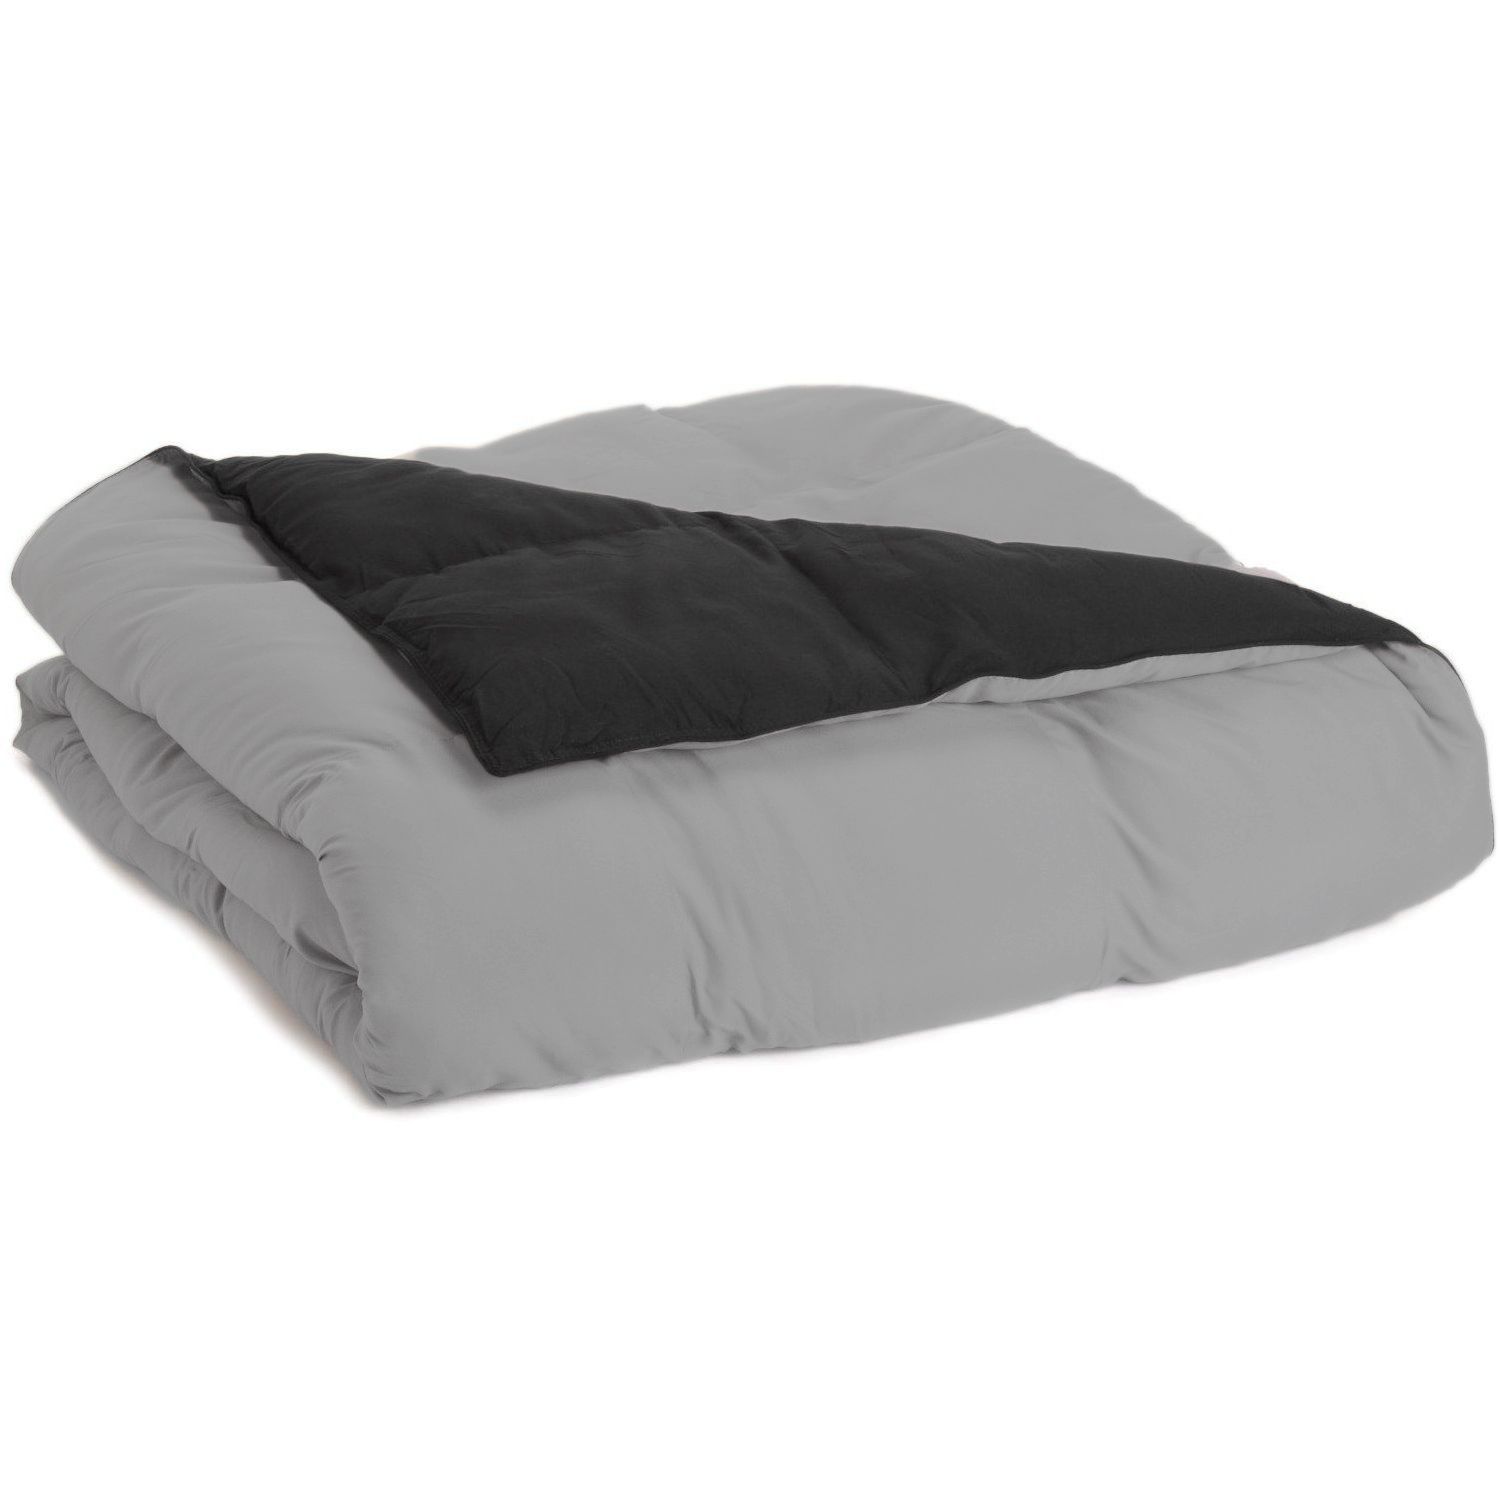 Superior Down Alternative Reversible Comforter, Full/ Queen, Black/ Grey - image 1 of 3